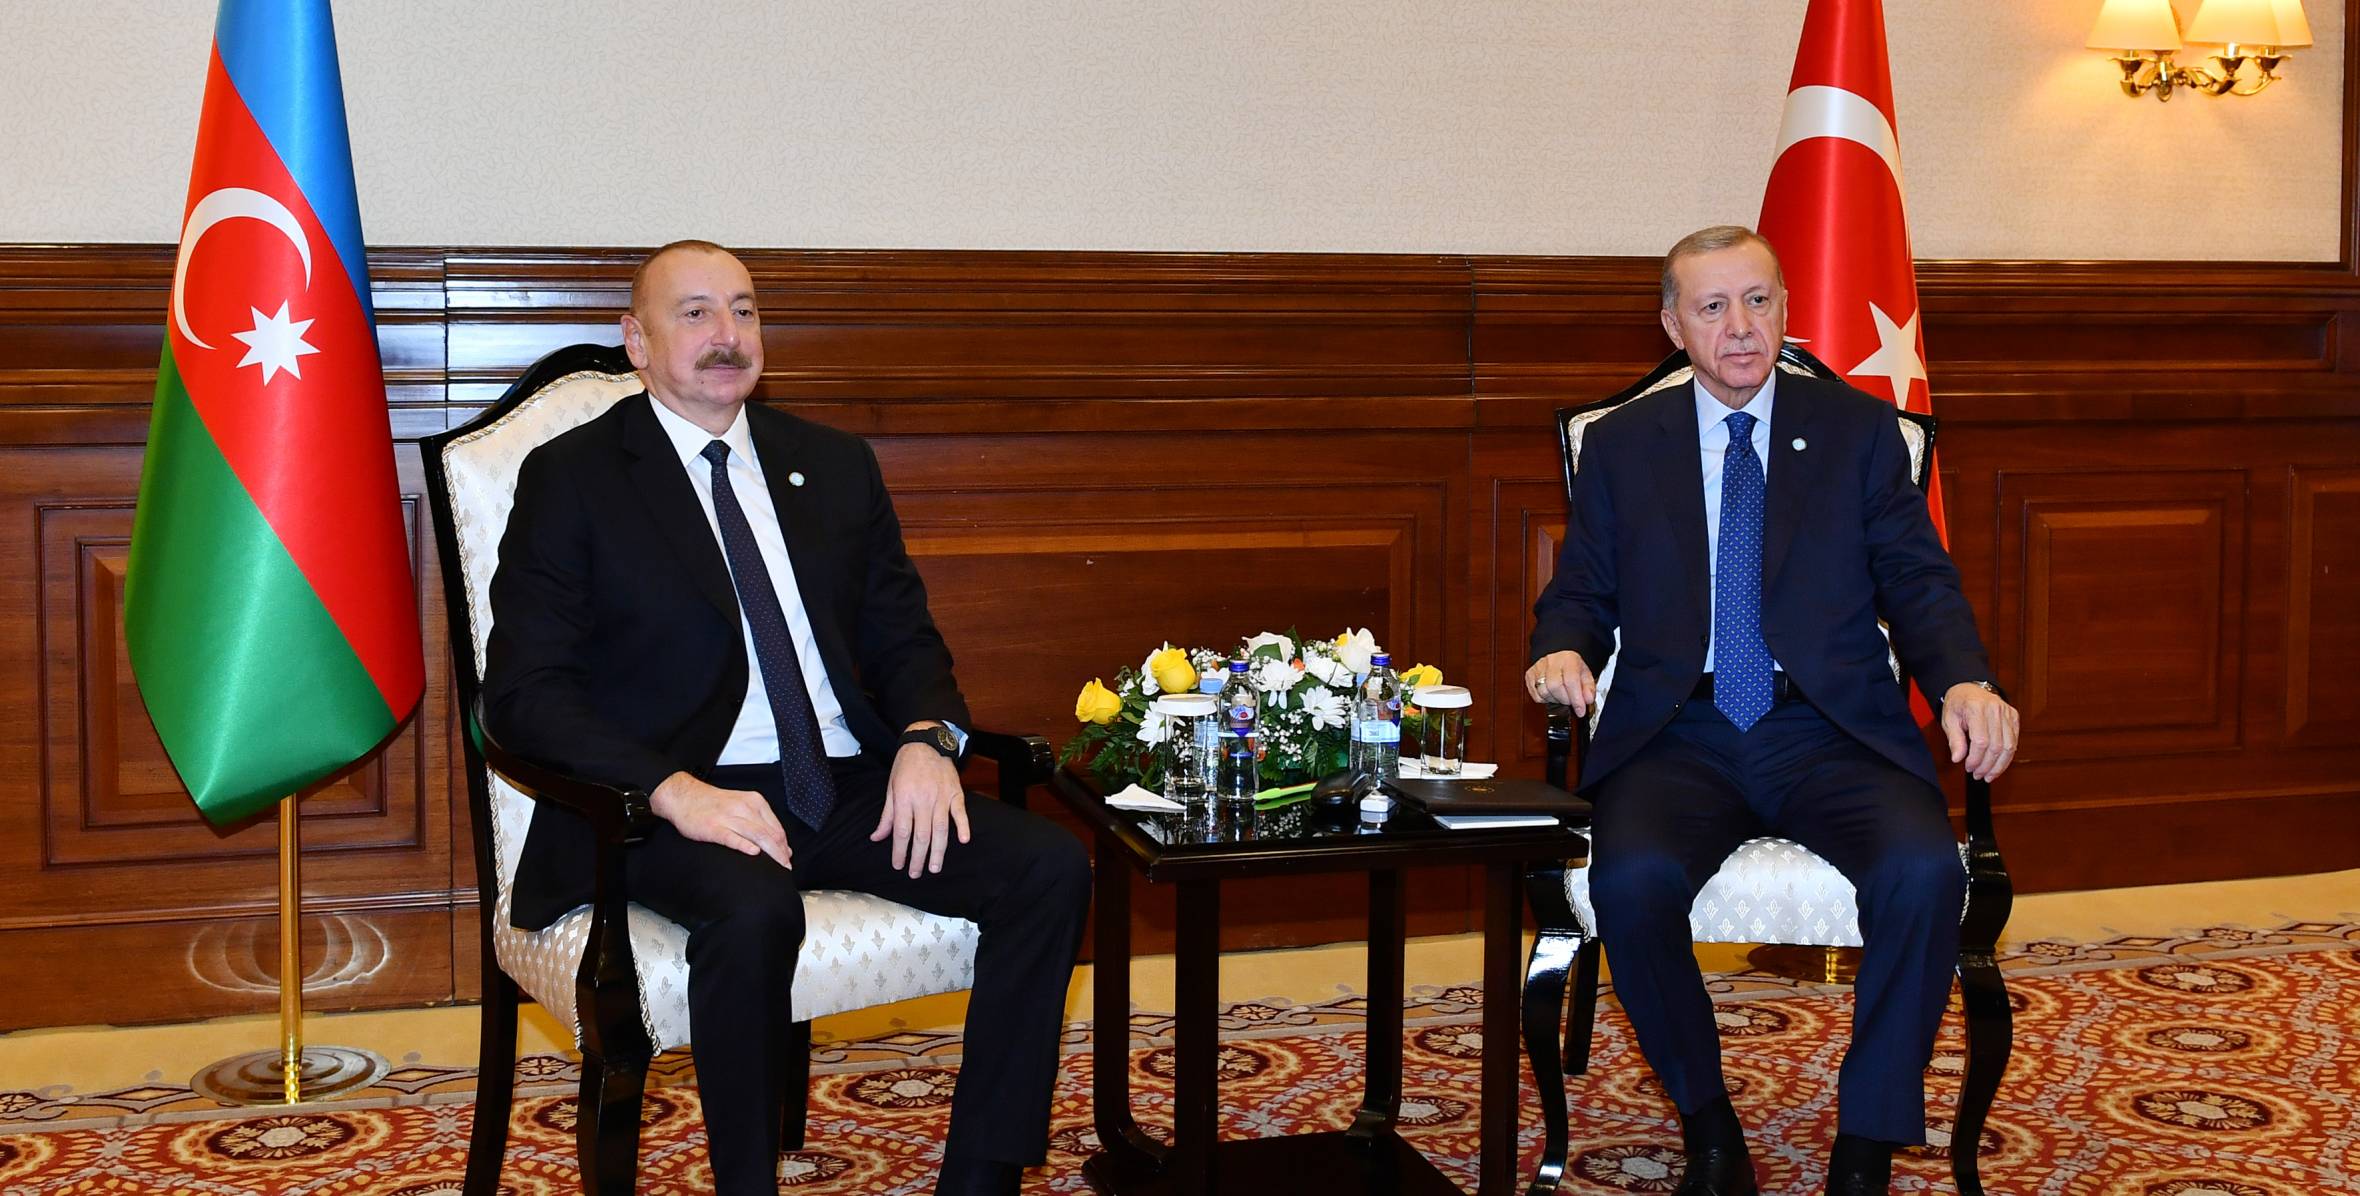 Ilham Aliyev held meeting with President of Türkiye Recep Tayyip Erdogan in Astana